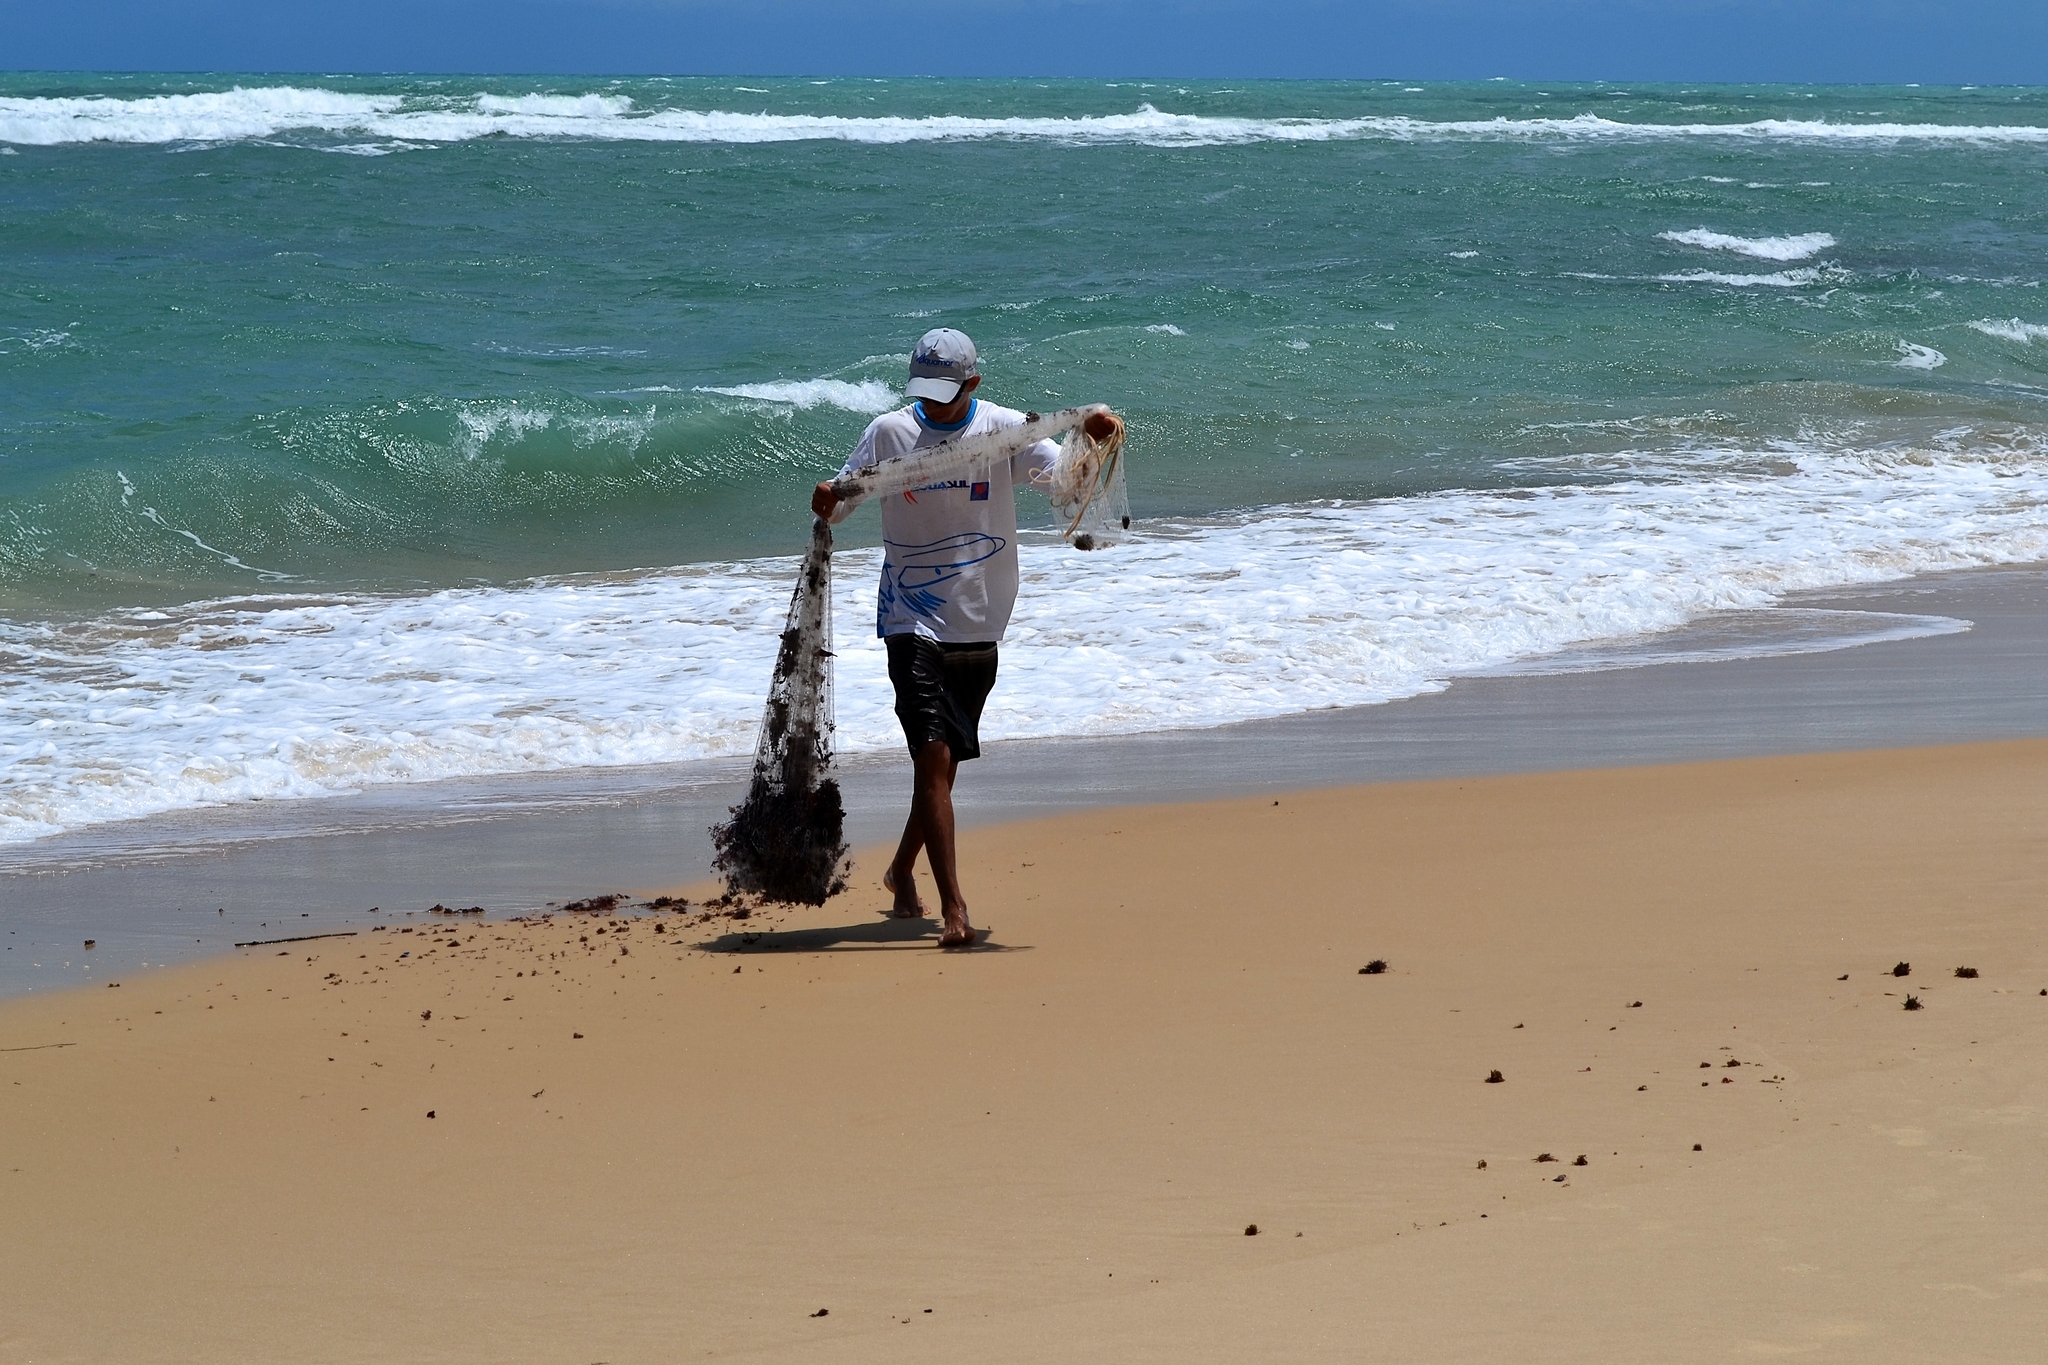 Tartaruga beach. - My, Brazil, South America, Travels, Longpost, Independence, Beach, Relaxation, Tourism